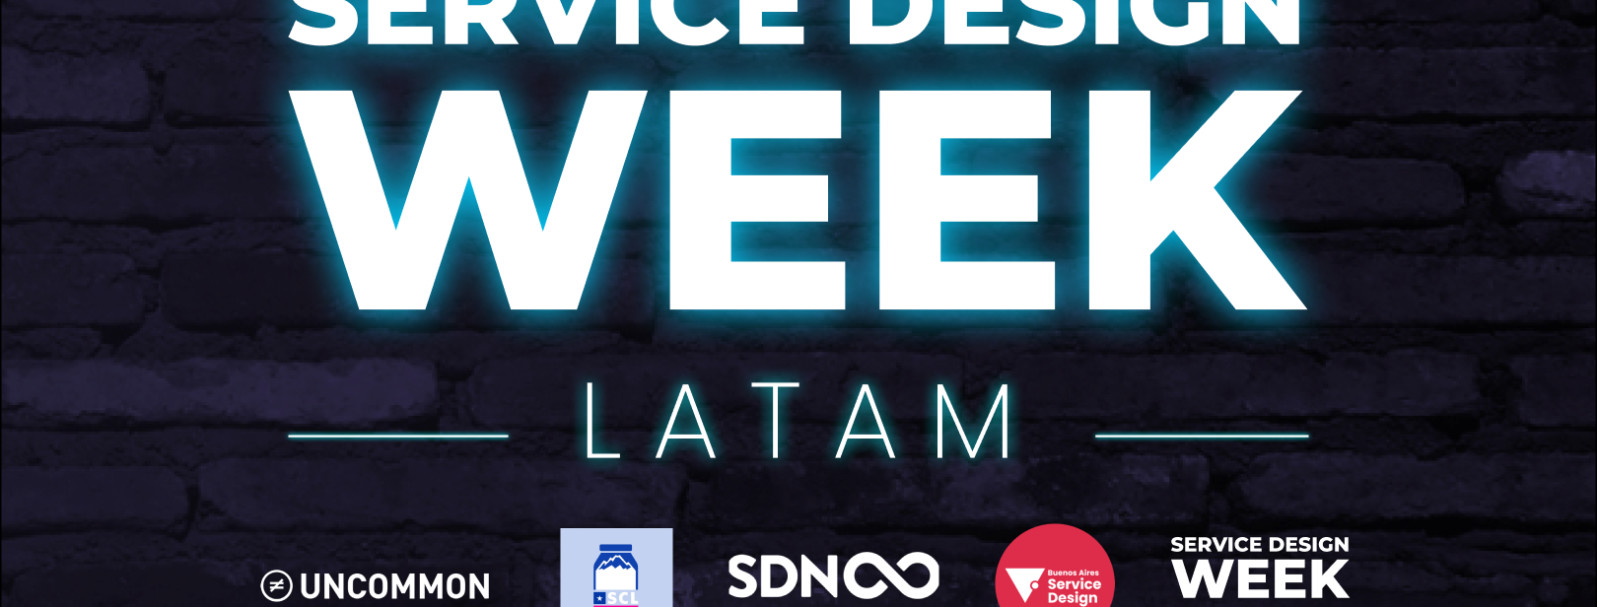 Service Design Week LATAM